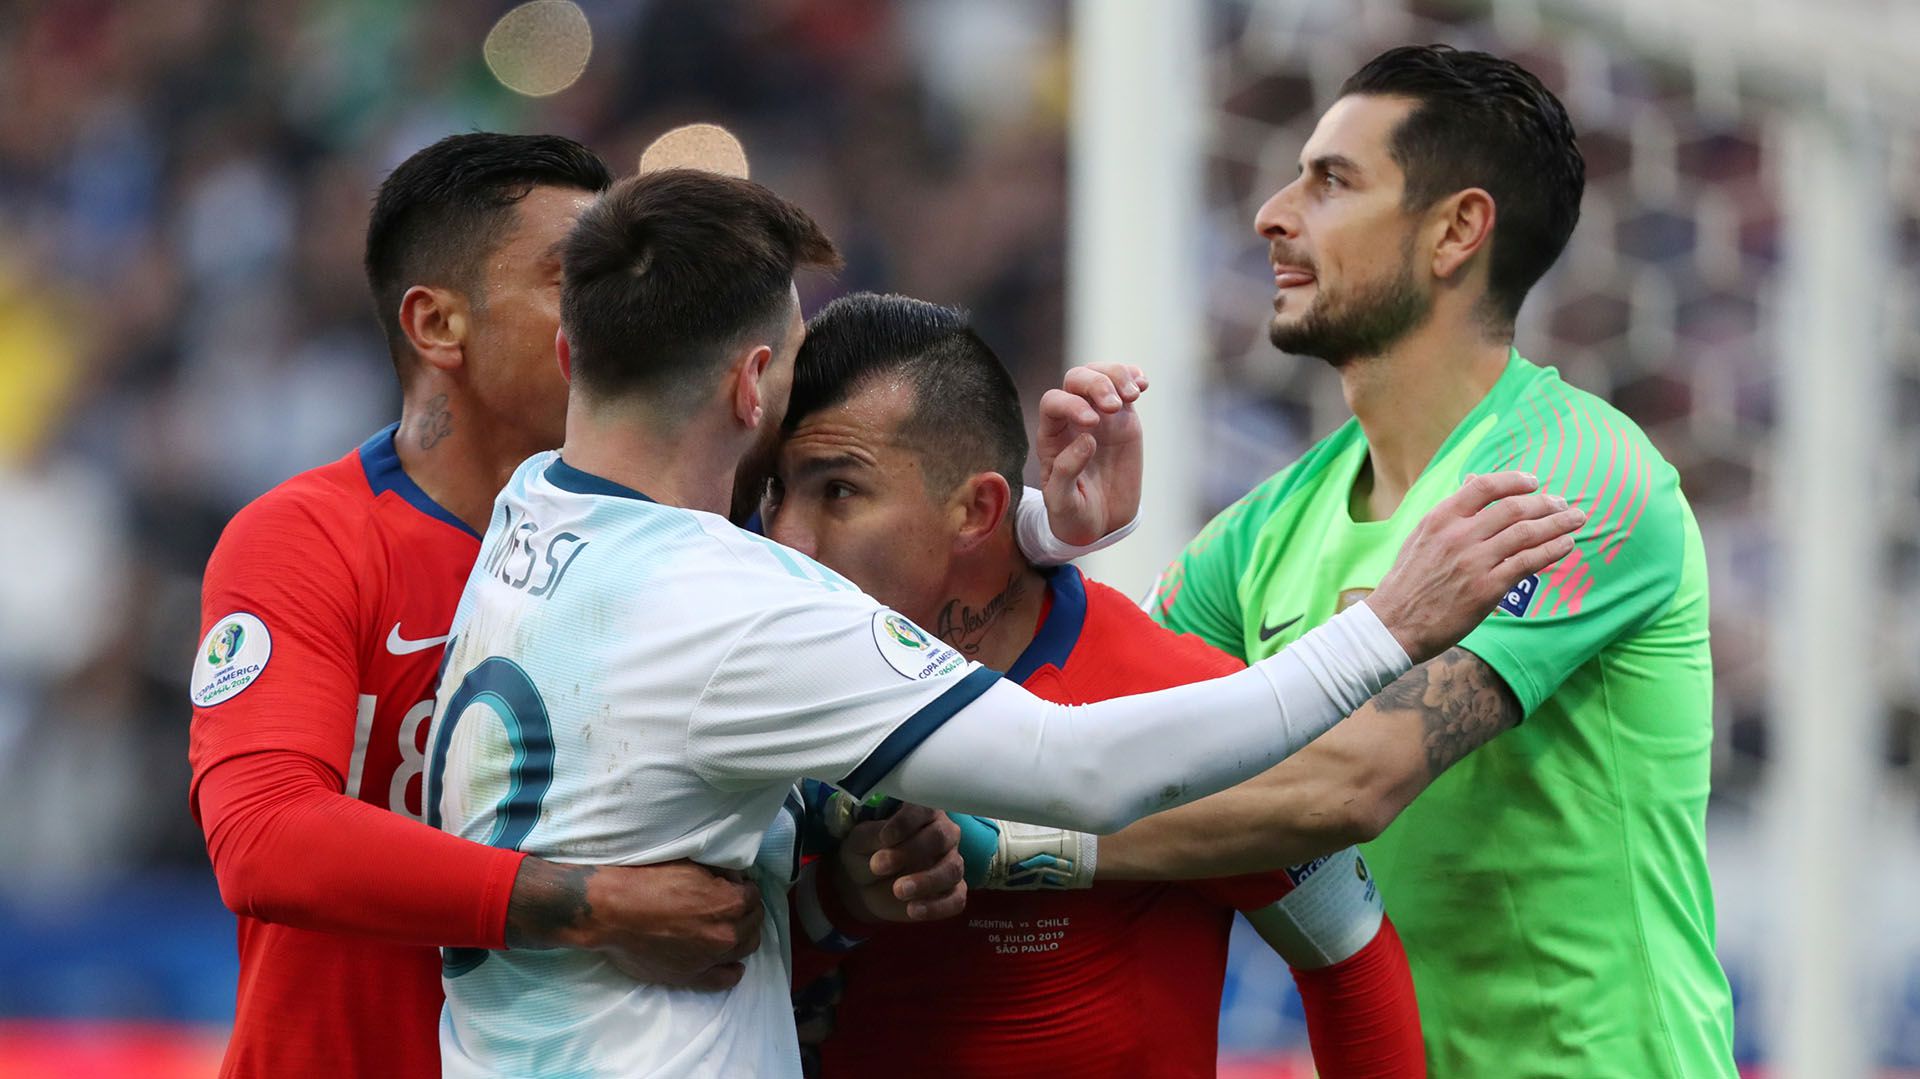 Medel le tira un cabezazo a Messi mientras dos compañeros intentan retenerlo (REUTERS/Amanda Perobelli)